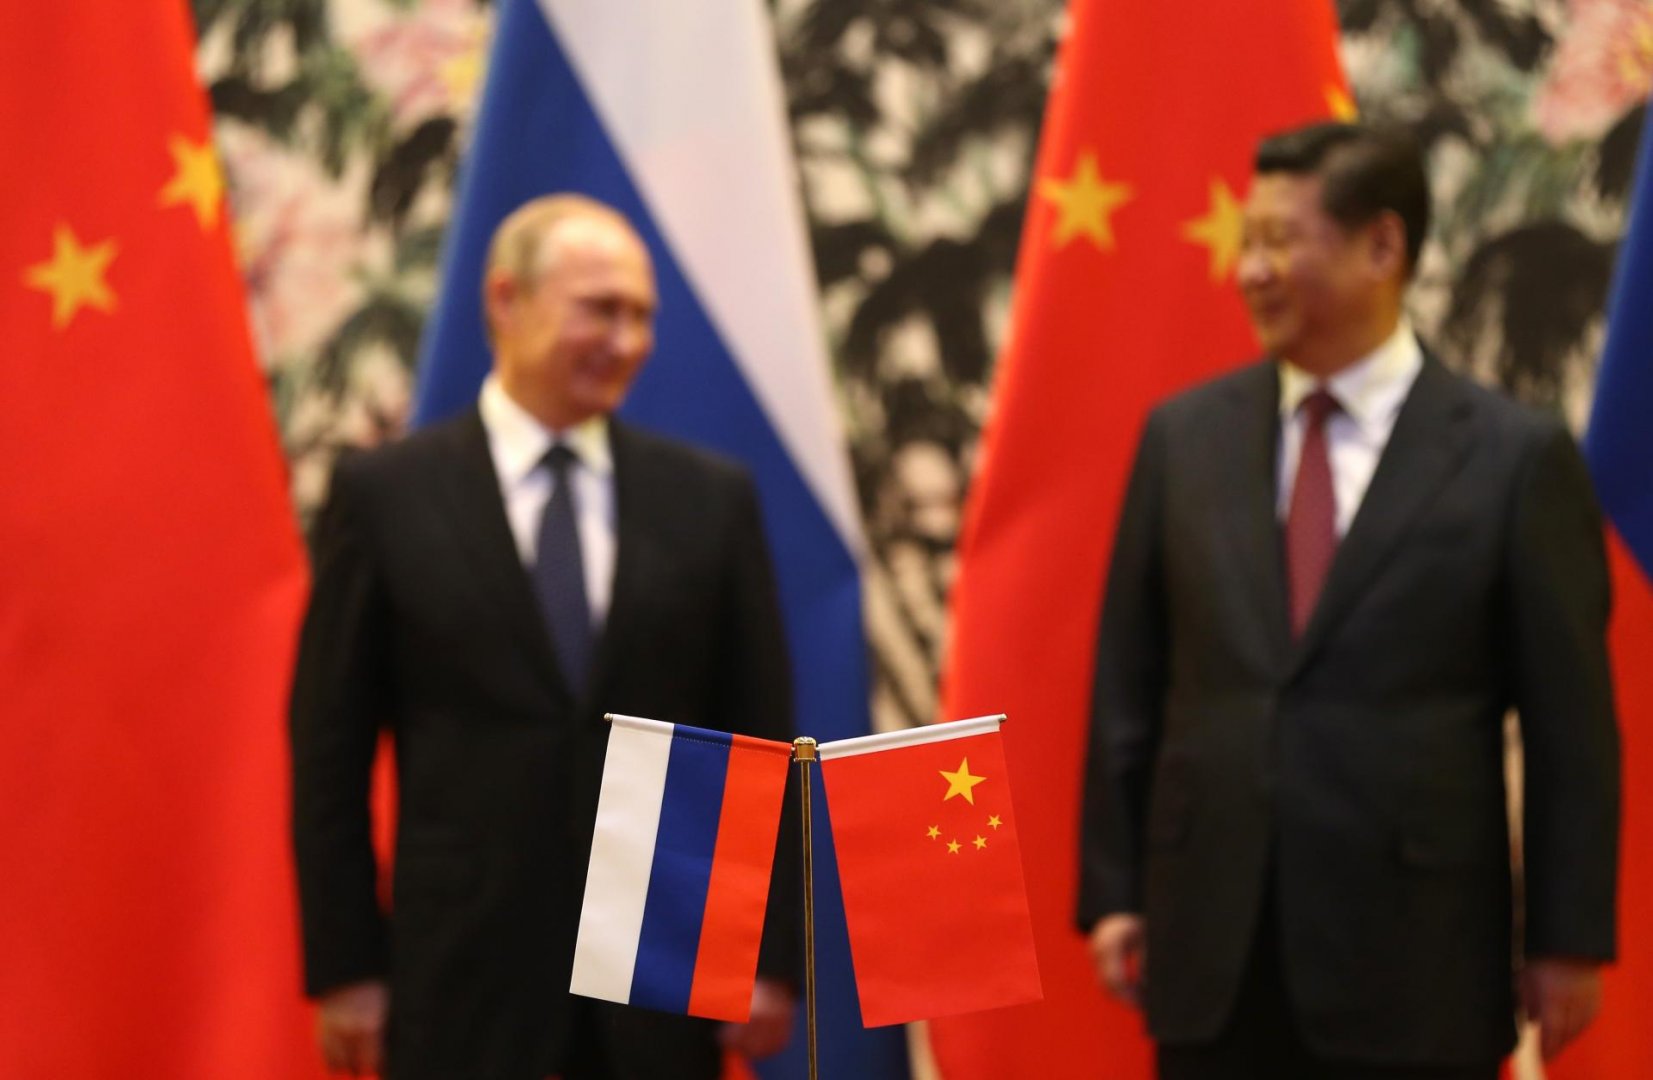 Putin, Xi Jinping wrap up talks in the Kremlin